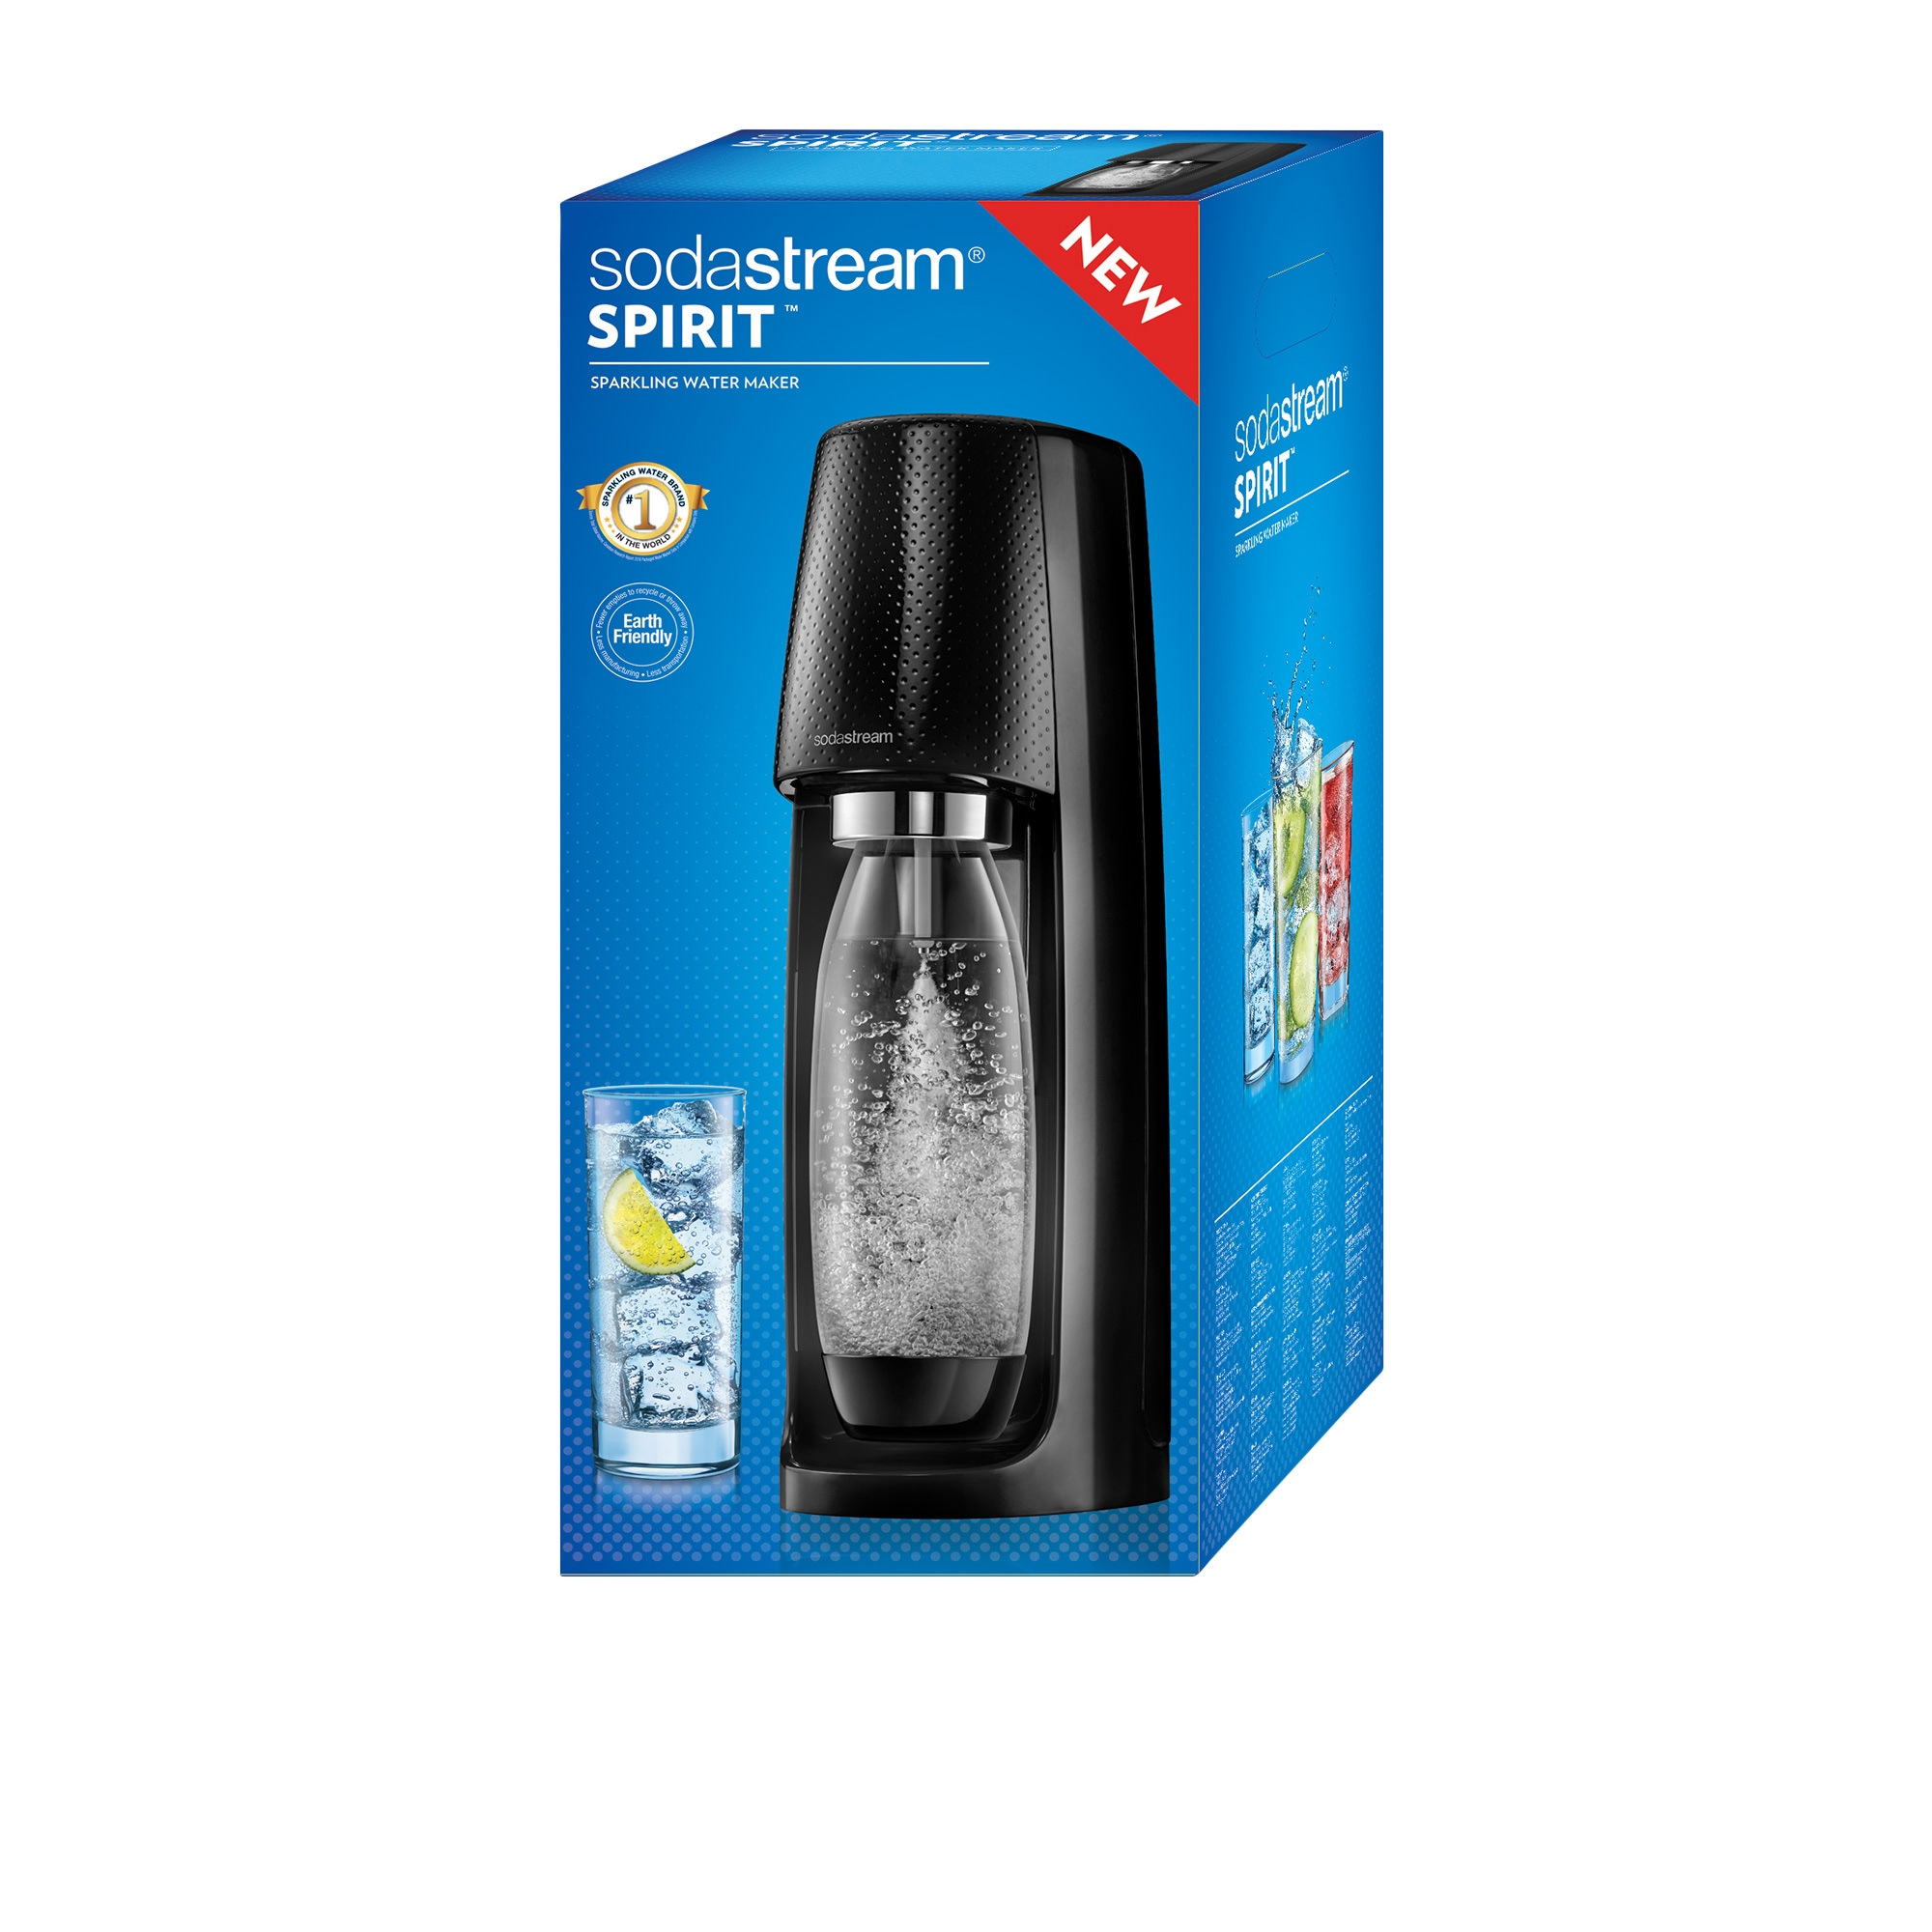 SodaStream Spirit Drink Maker Black Image 3